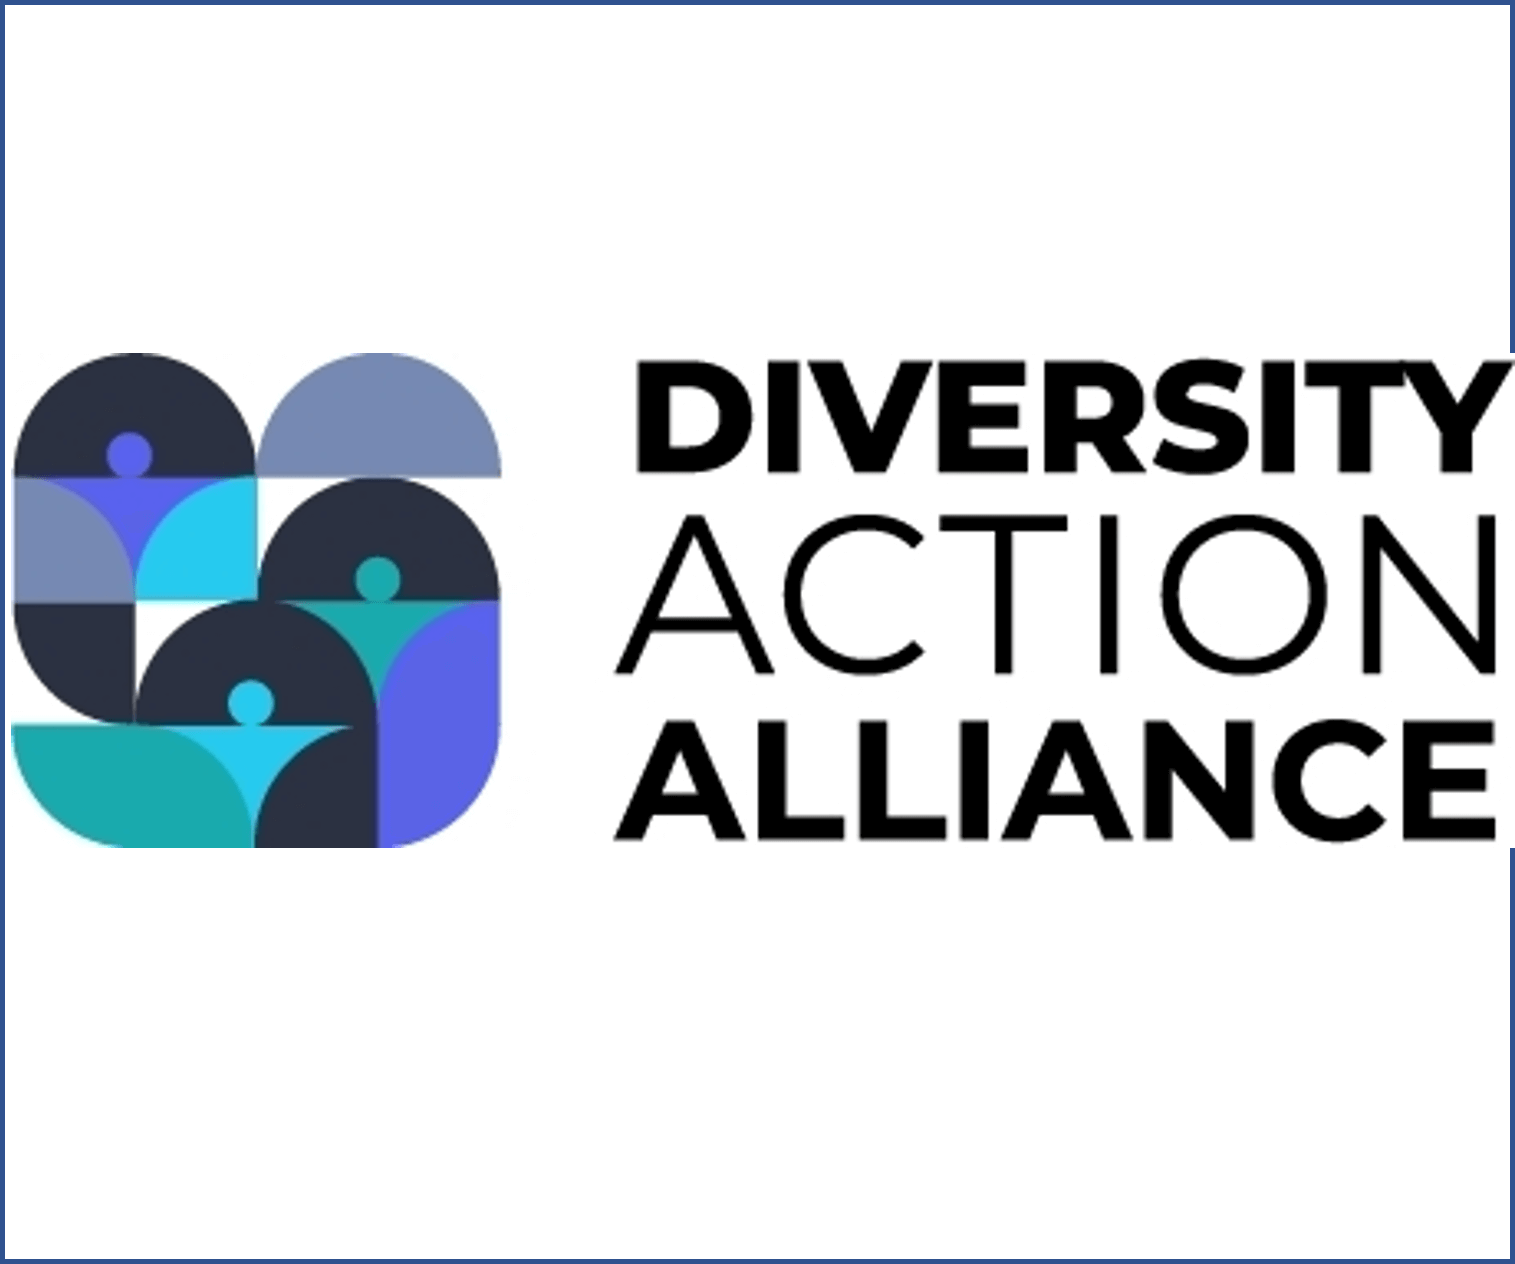 Diversity Action Alliance logo.